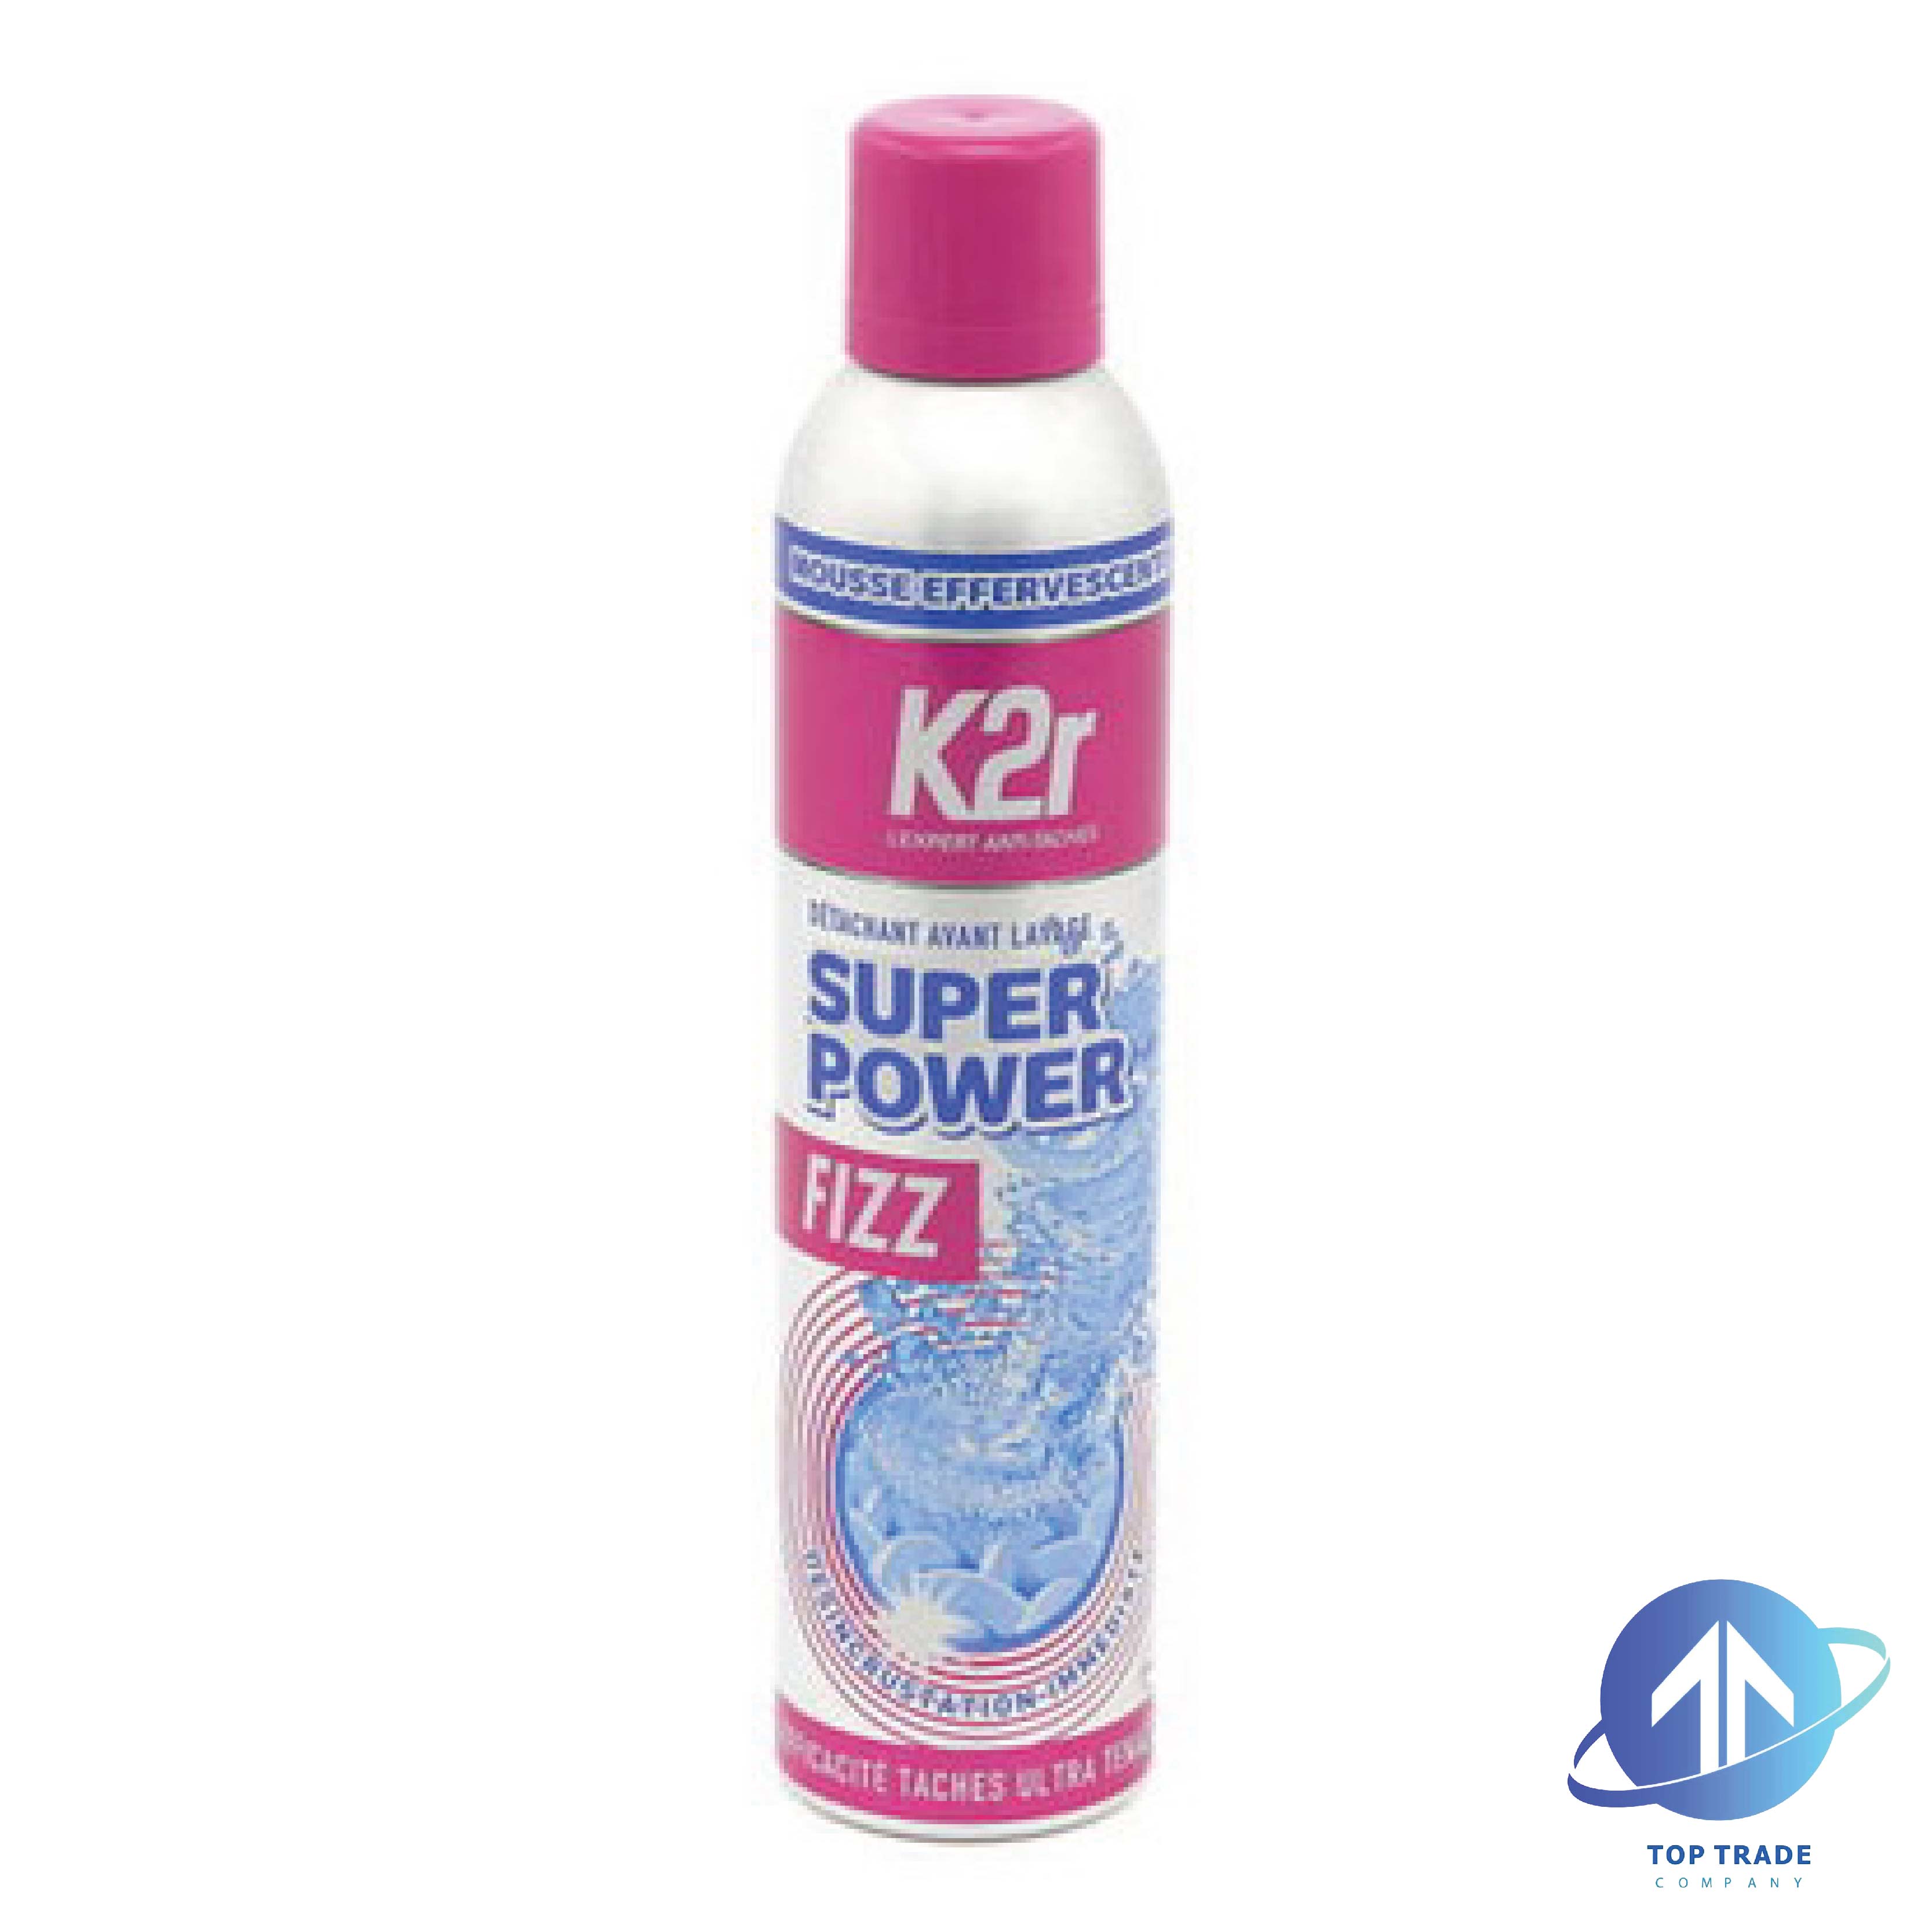 K2R prewash stainremover spray Super Power Fizz 300ml